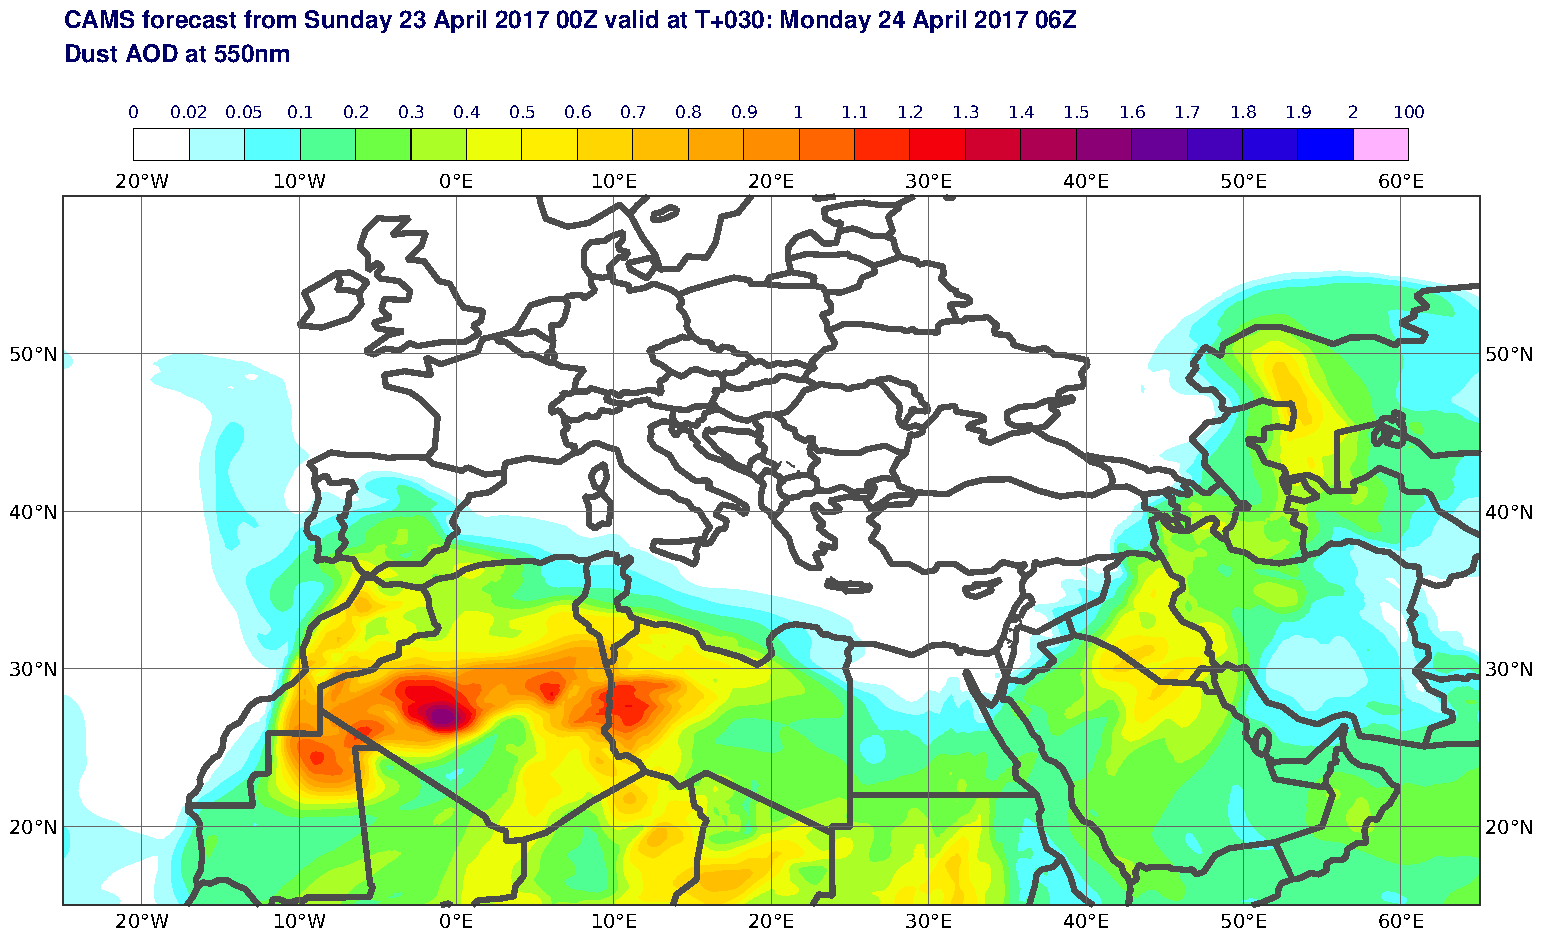 Dust AOD at 550nm valid at T30 - 2017-04-24 06:00